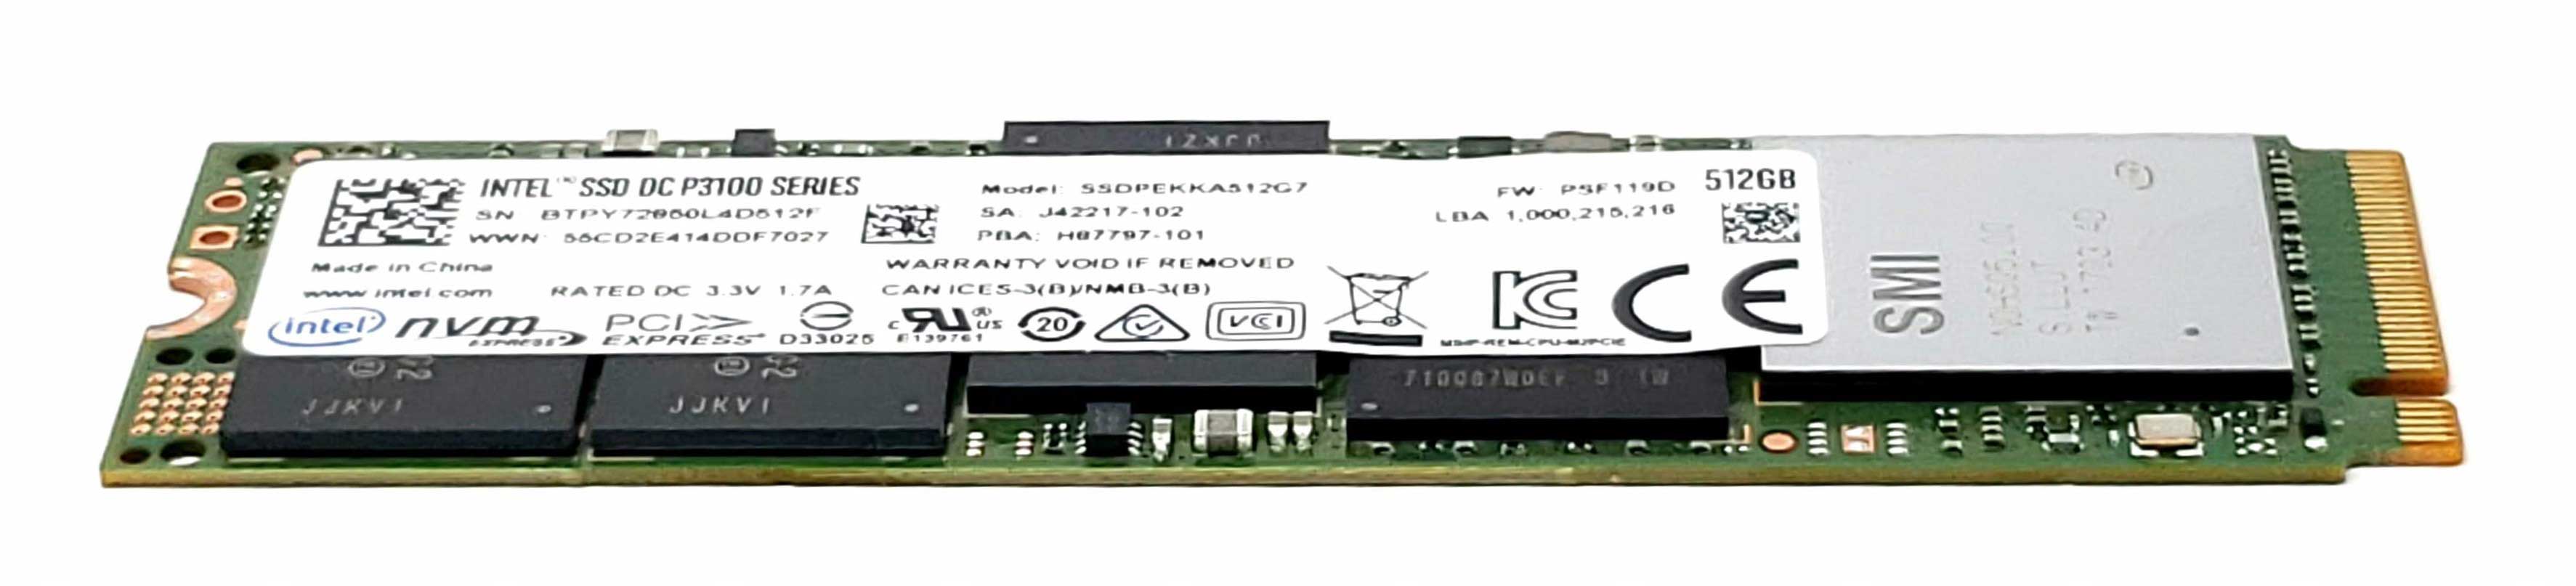 Intel SSDPEKNW512G8H - 512GB M.2 PCIe NVMe 2280 MLC 3D-Nand SSD Solid State